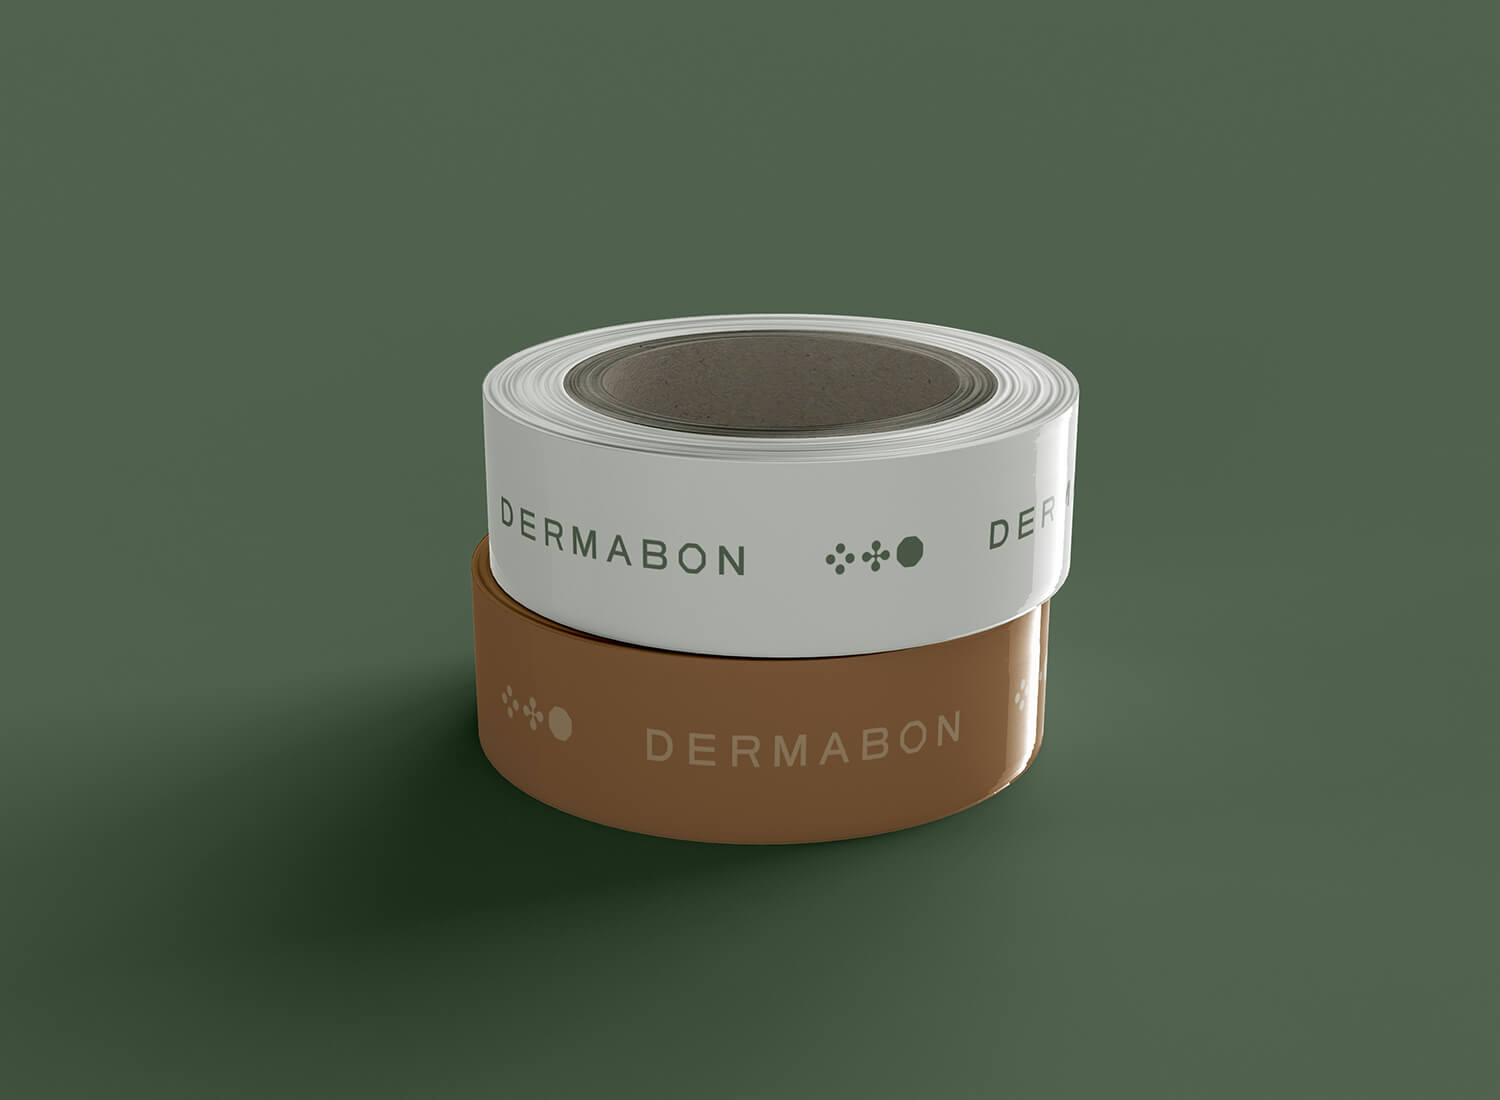 Dermabon packaging tape design by Phidev